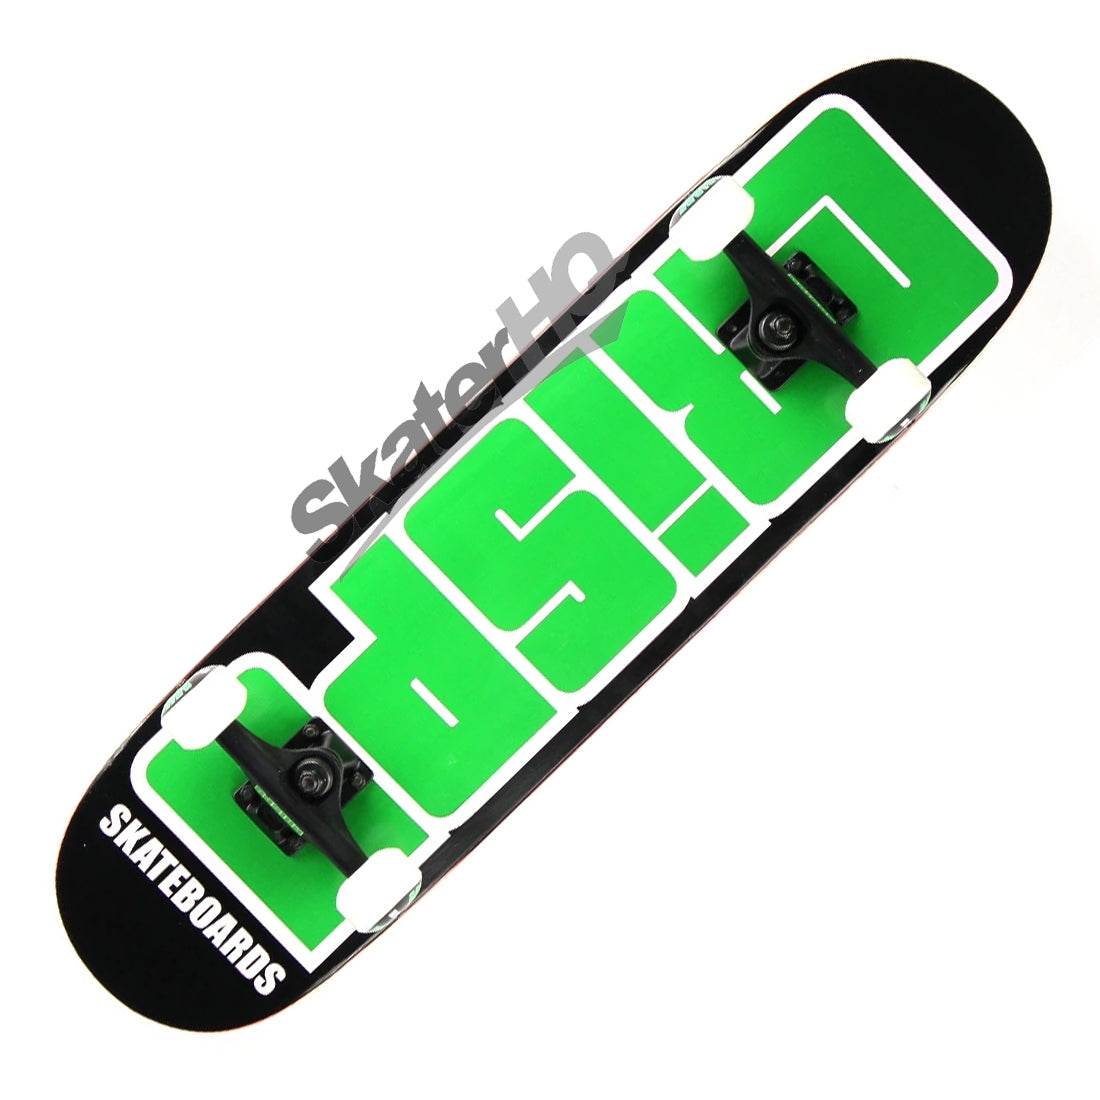 Crispy Advanced 7.75 Complete - Black/Green Skateboard Completes Modern Street